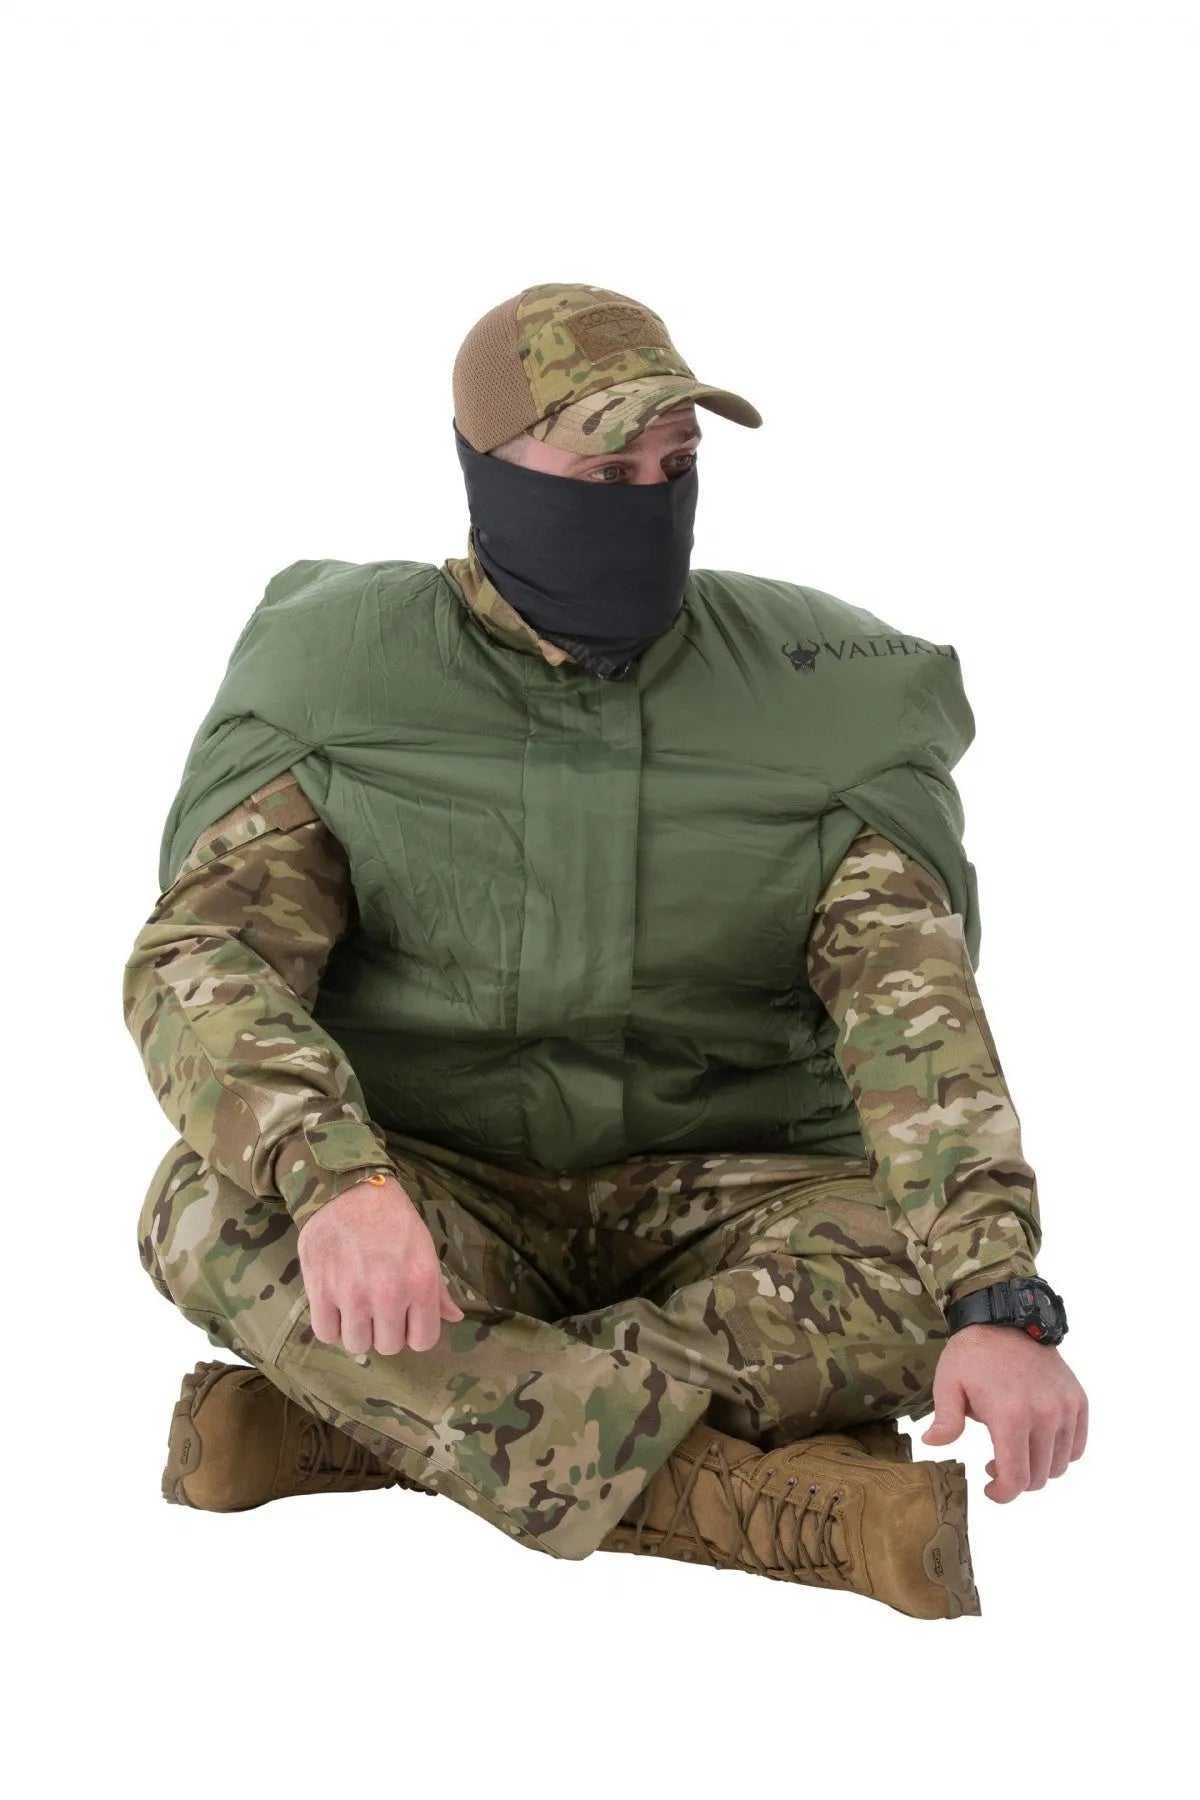 Tactical Sleeping Bag (-15 Degrees C) JustGoodKit Tactical Sleeping Bag (-15 Degrees C) Sleeping Bags